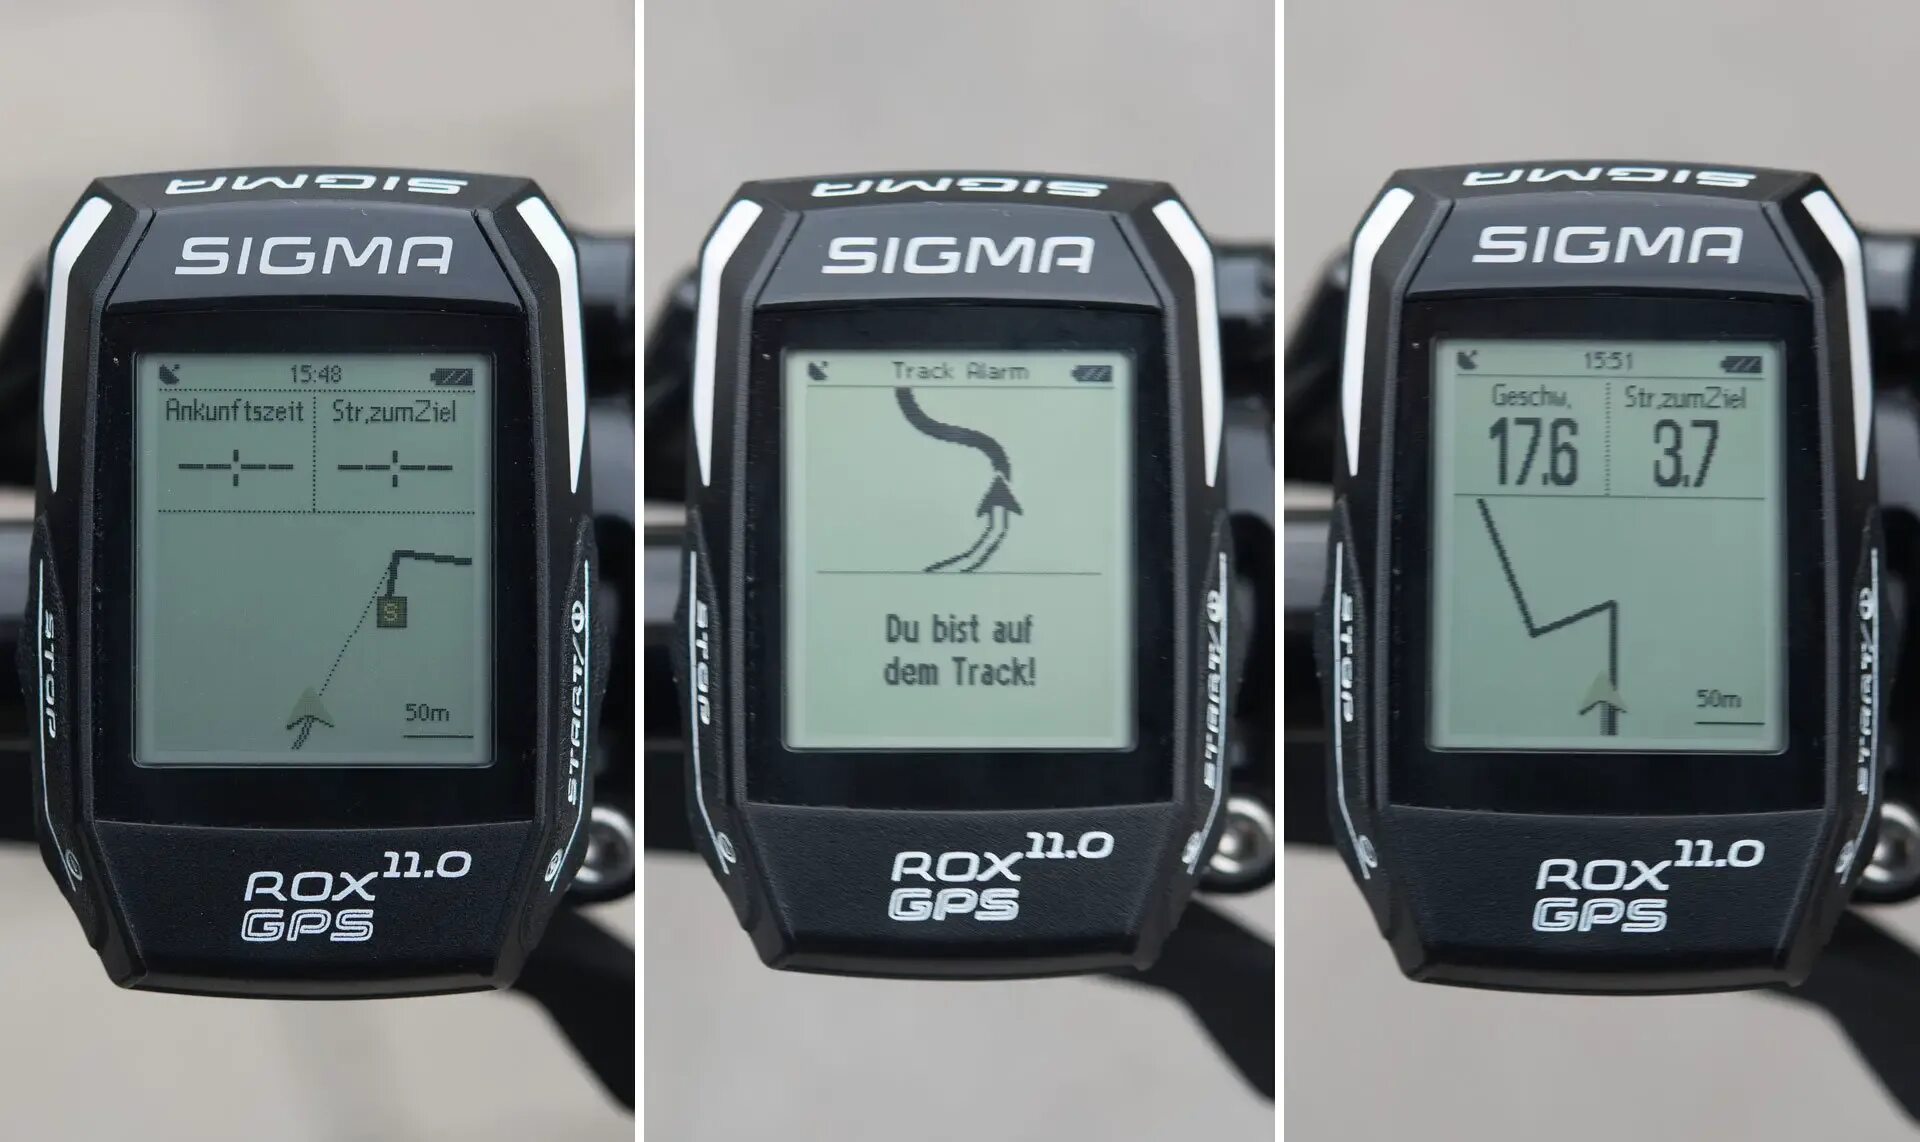 Sigma Rox GPS 11.0. Sigma Rox 11.1 Mount. Sigma ср-11. База Sigma Rox. Сигма сборник